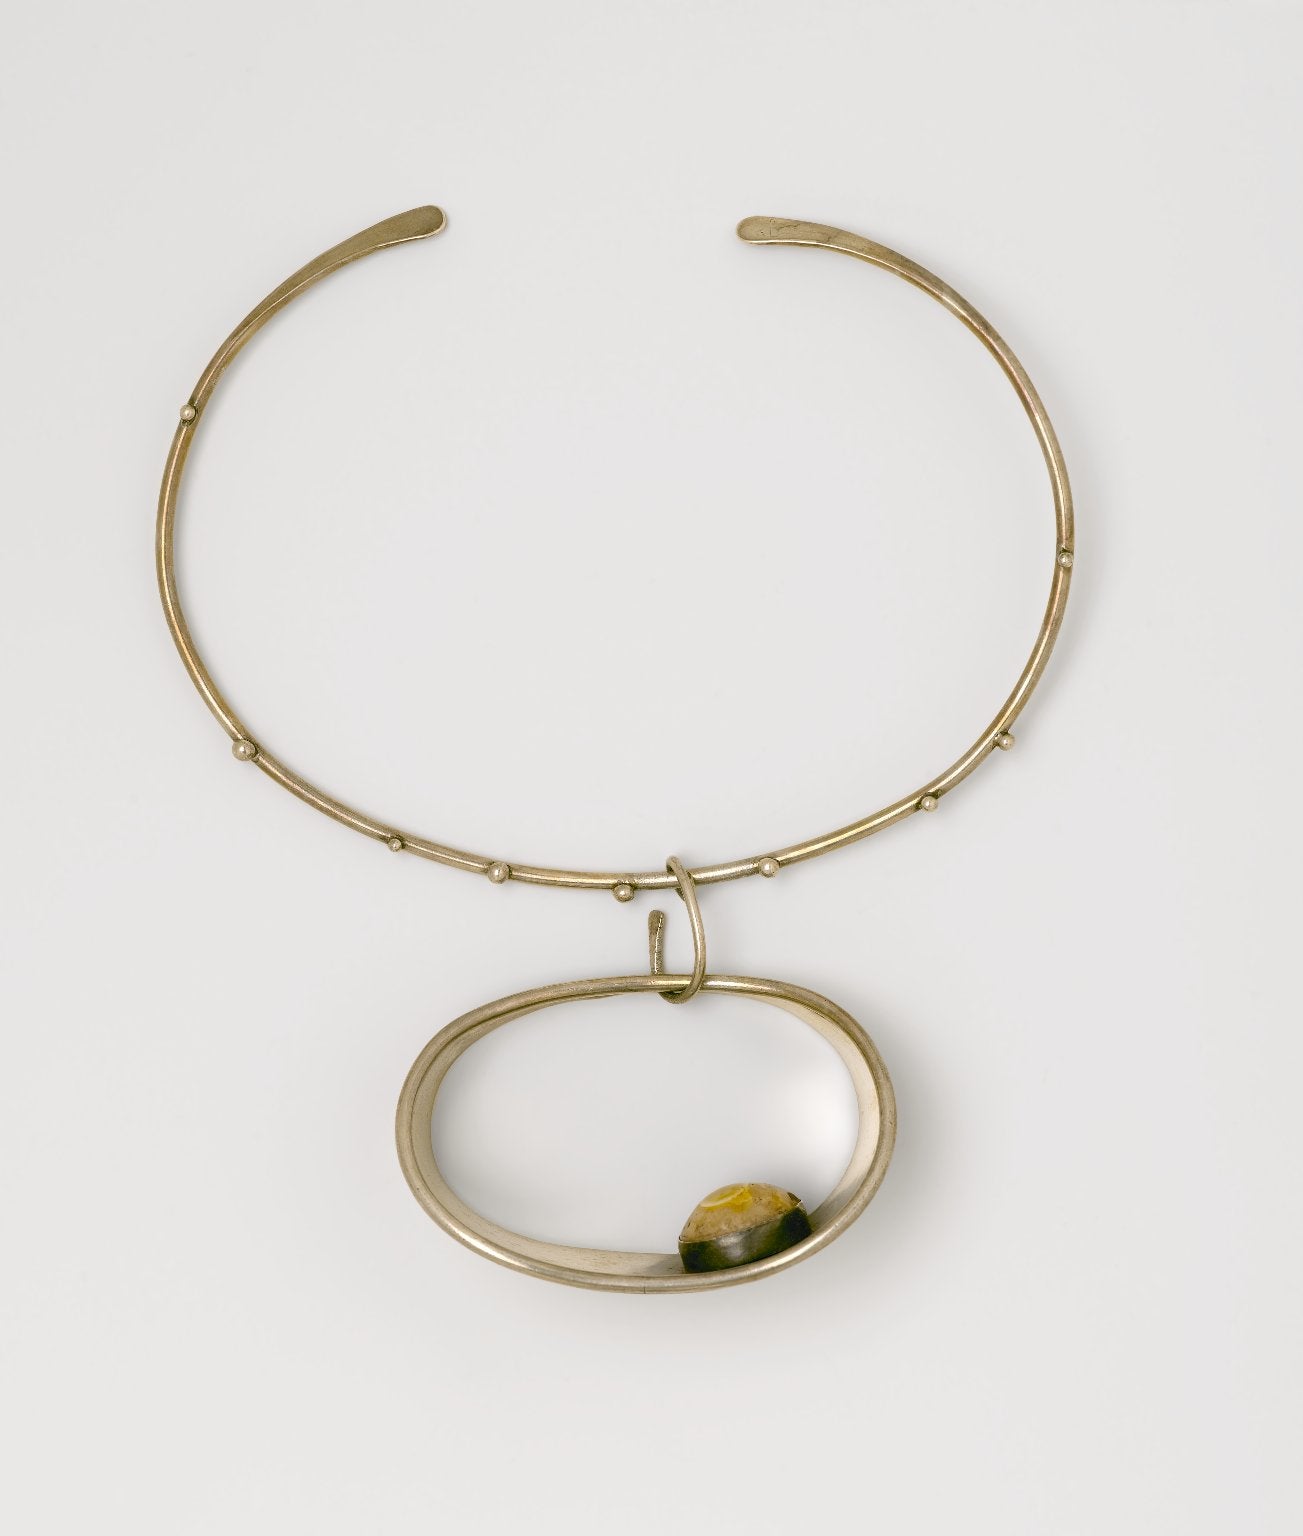 Precious Metals: Celebrating the Work of Modernist Jeweler Art Smith ...